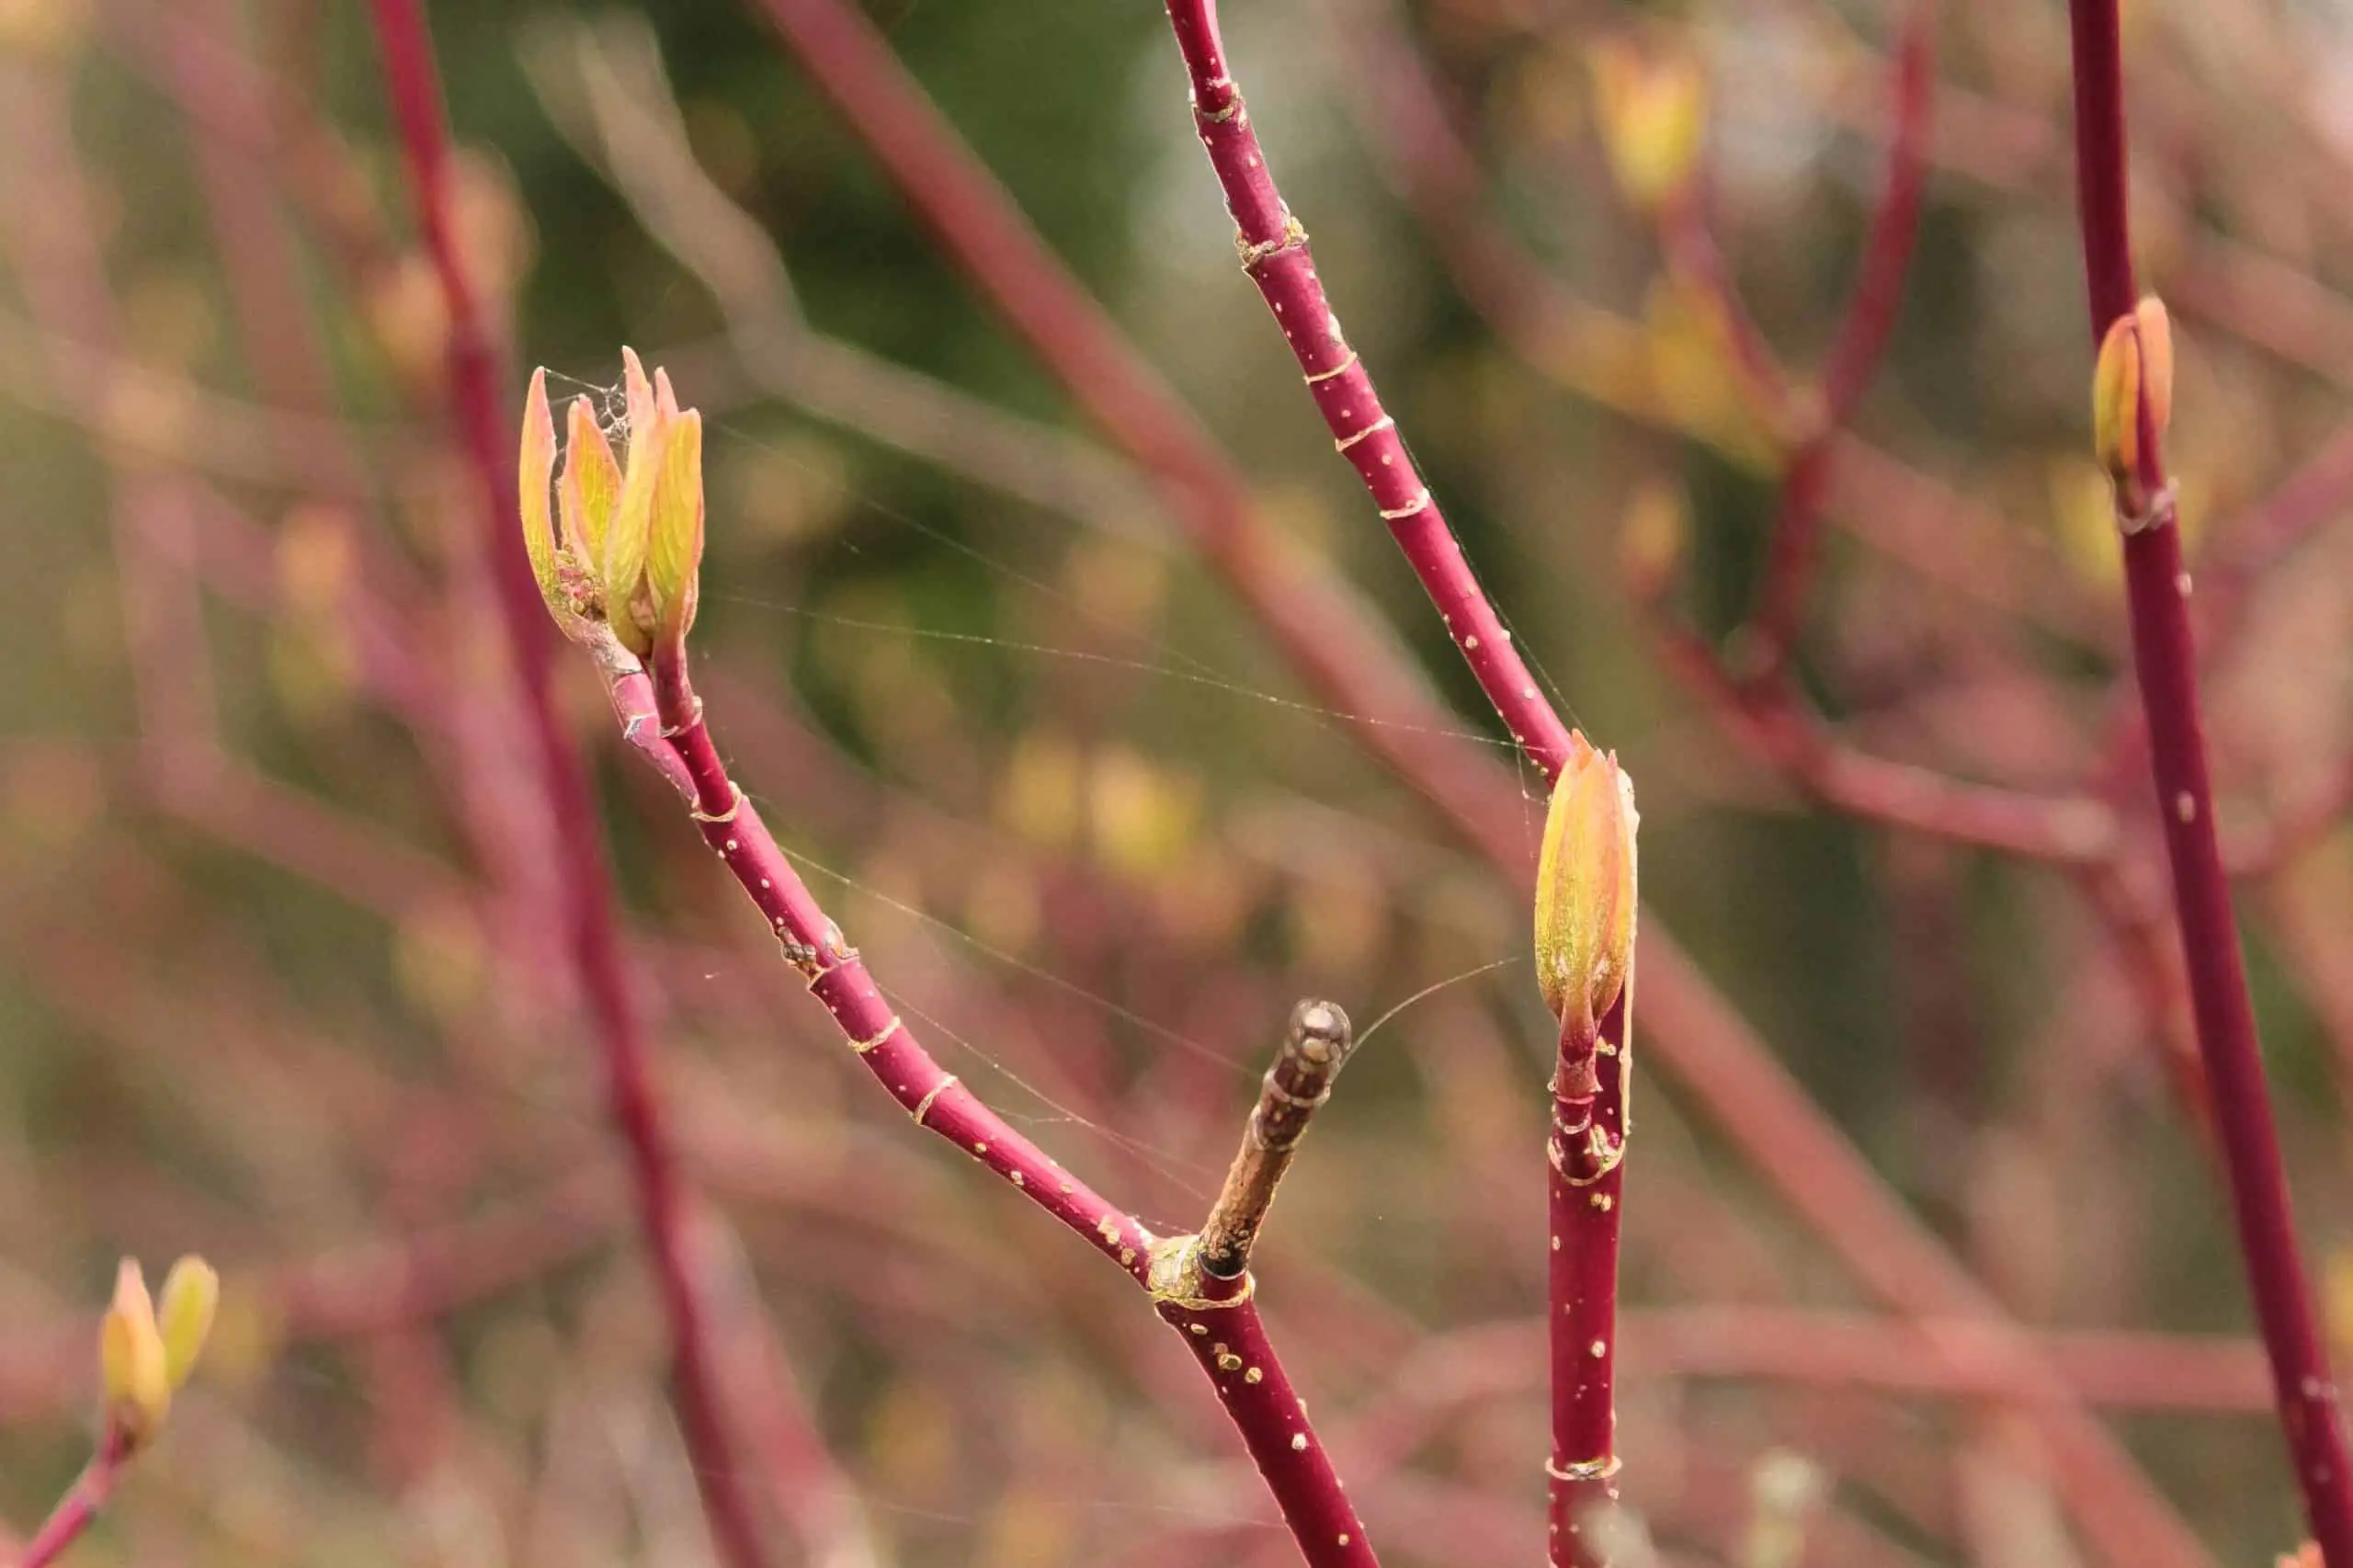 Close up of the Common dogwood (Cornus sanguinea) red stems